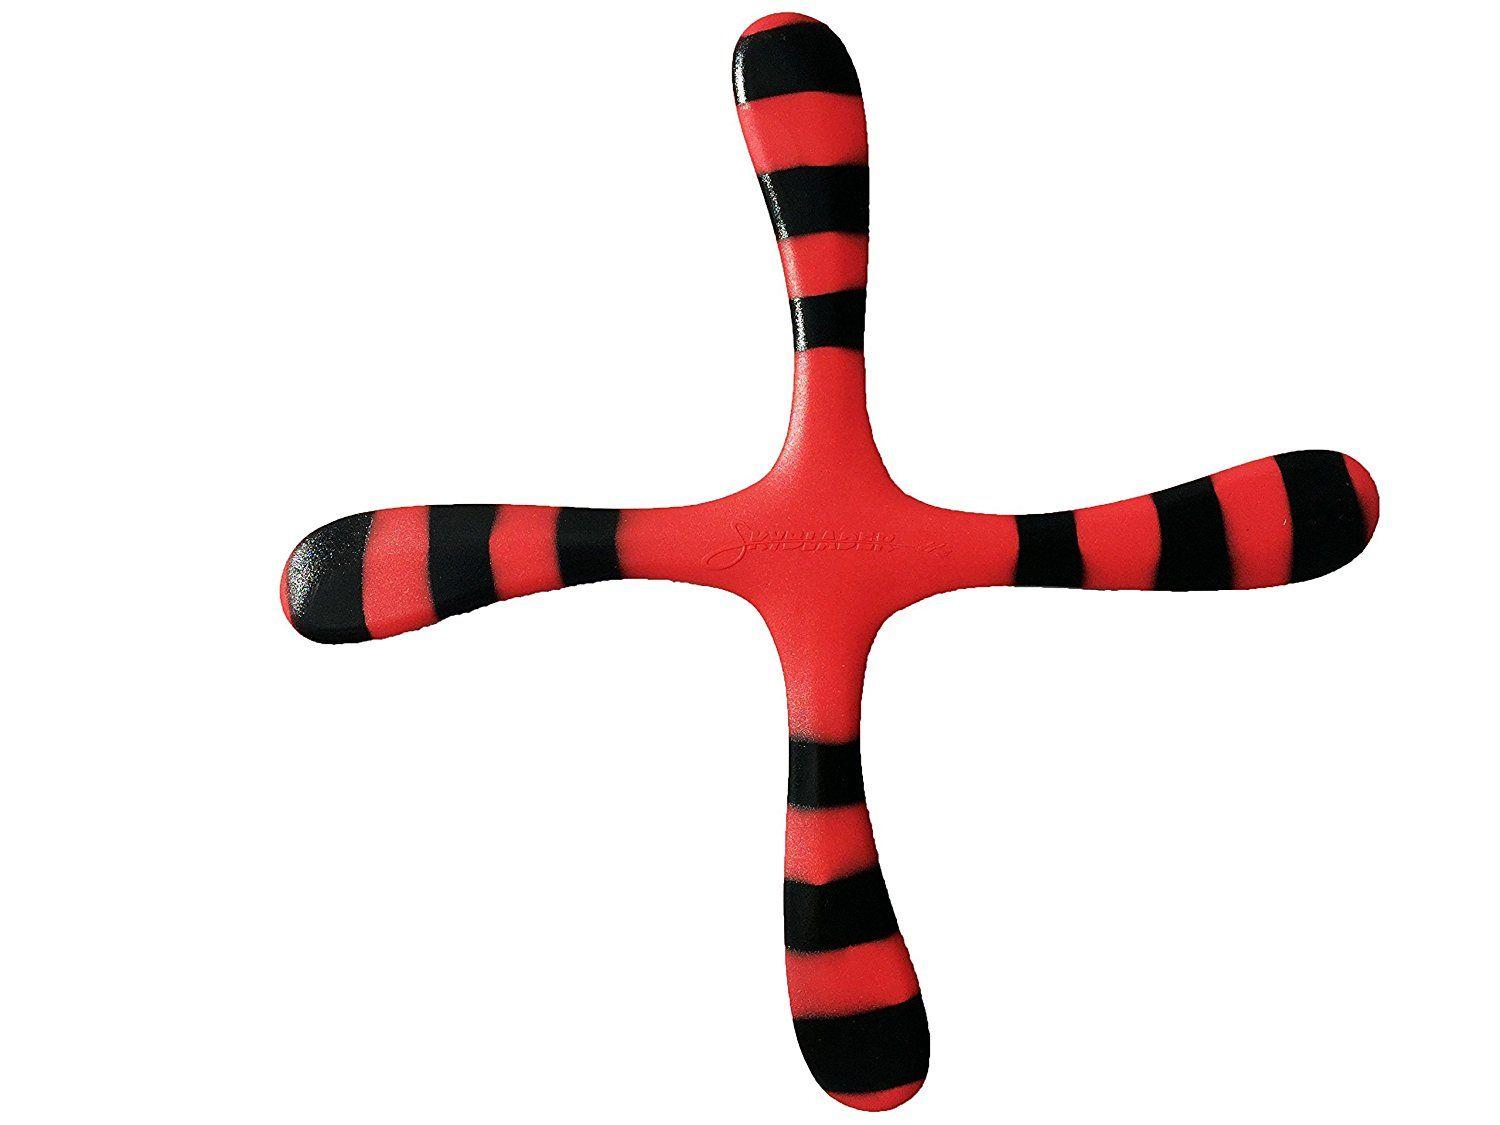 Red Boomerang Logo - Cheap Red Boomerang, find Red Boomerang deals on line at Alibaba.com